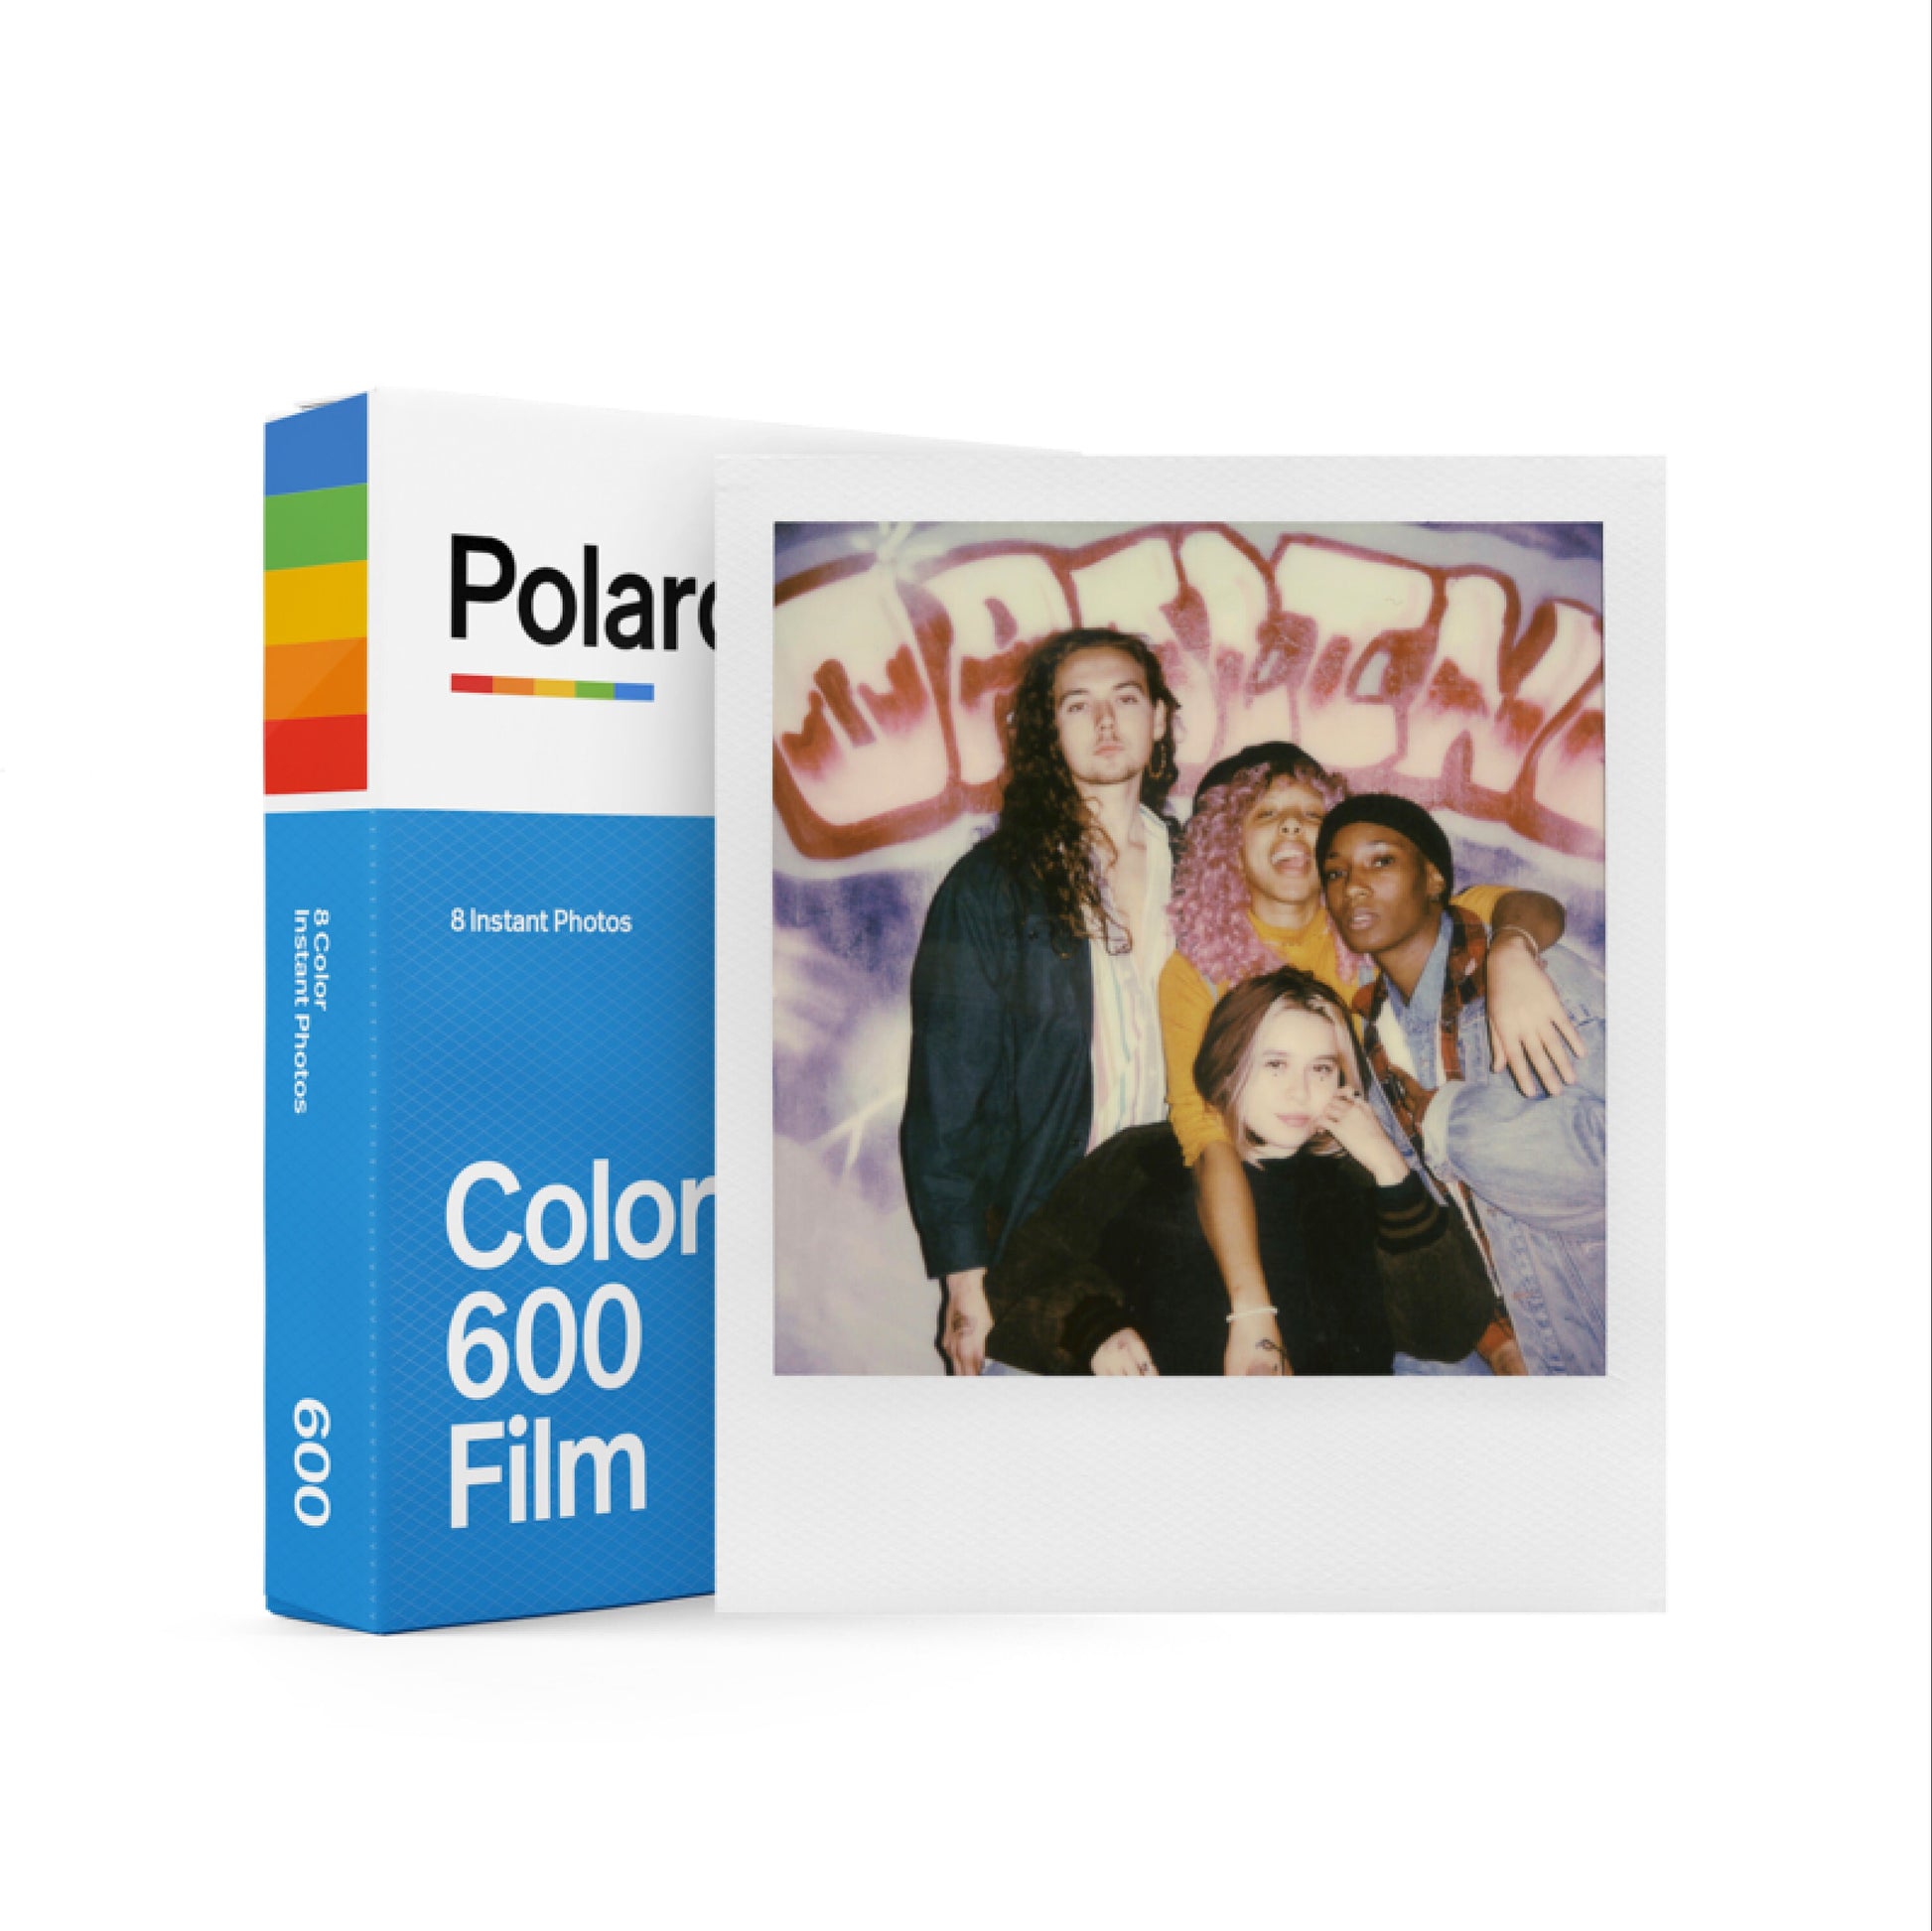 Polaroid Impulse Portrait Camera, Gift Polaroid Camera, VIntage Polaroid with films - Vintage Polaroid Instant Cameras